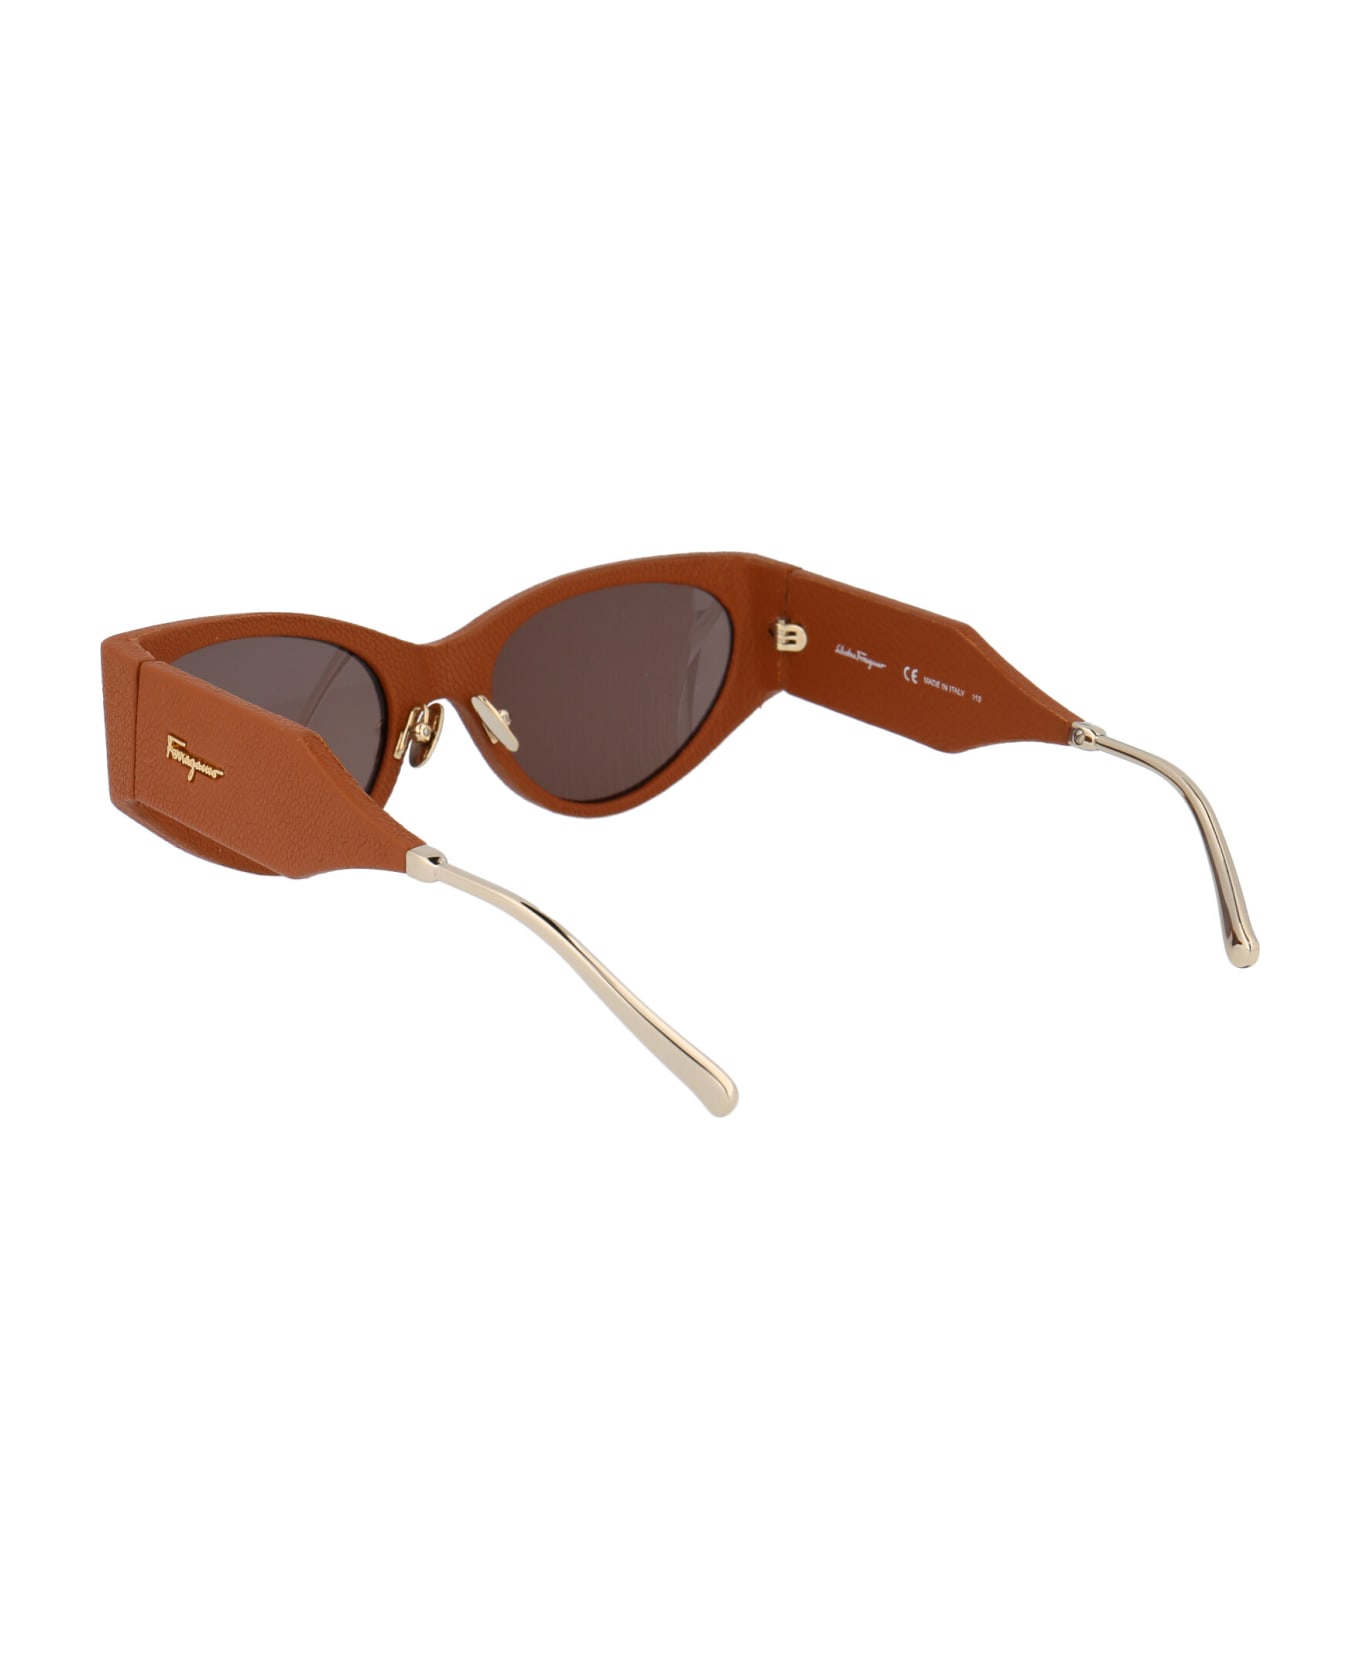 Salvatore Ferragamo Eyewear Sf950sl Sunglasses - 261 CARAMEL LEATHER